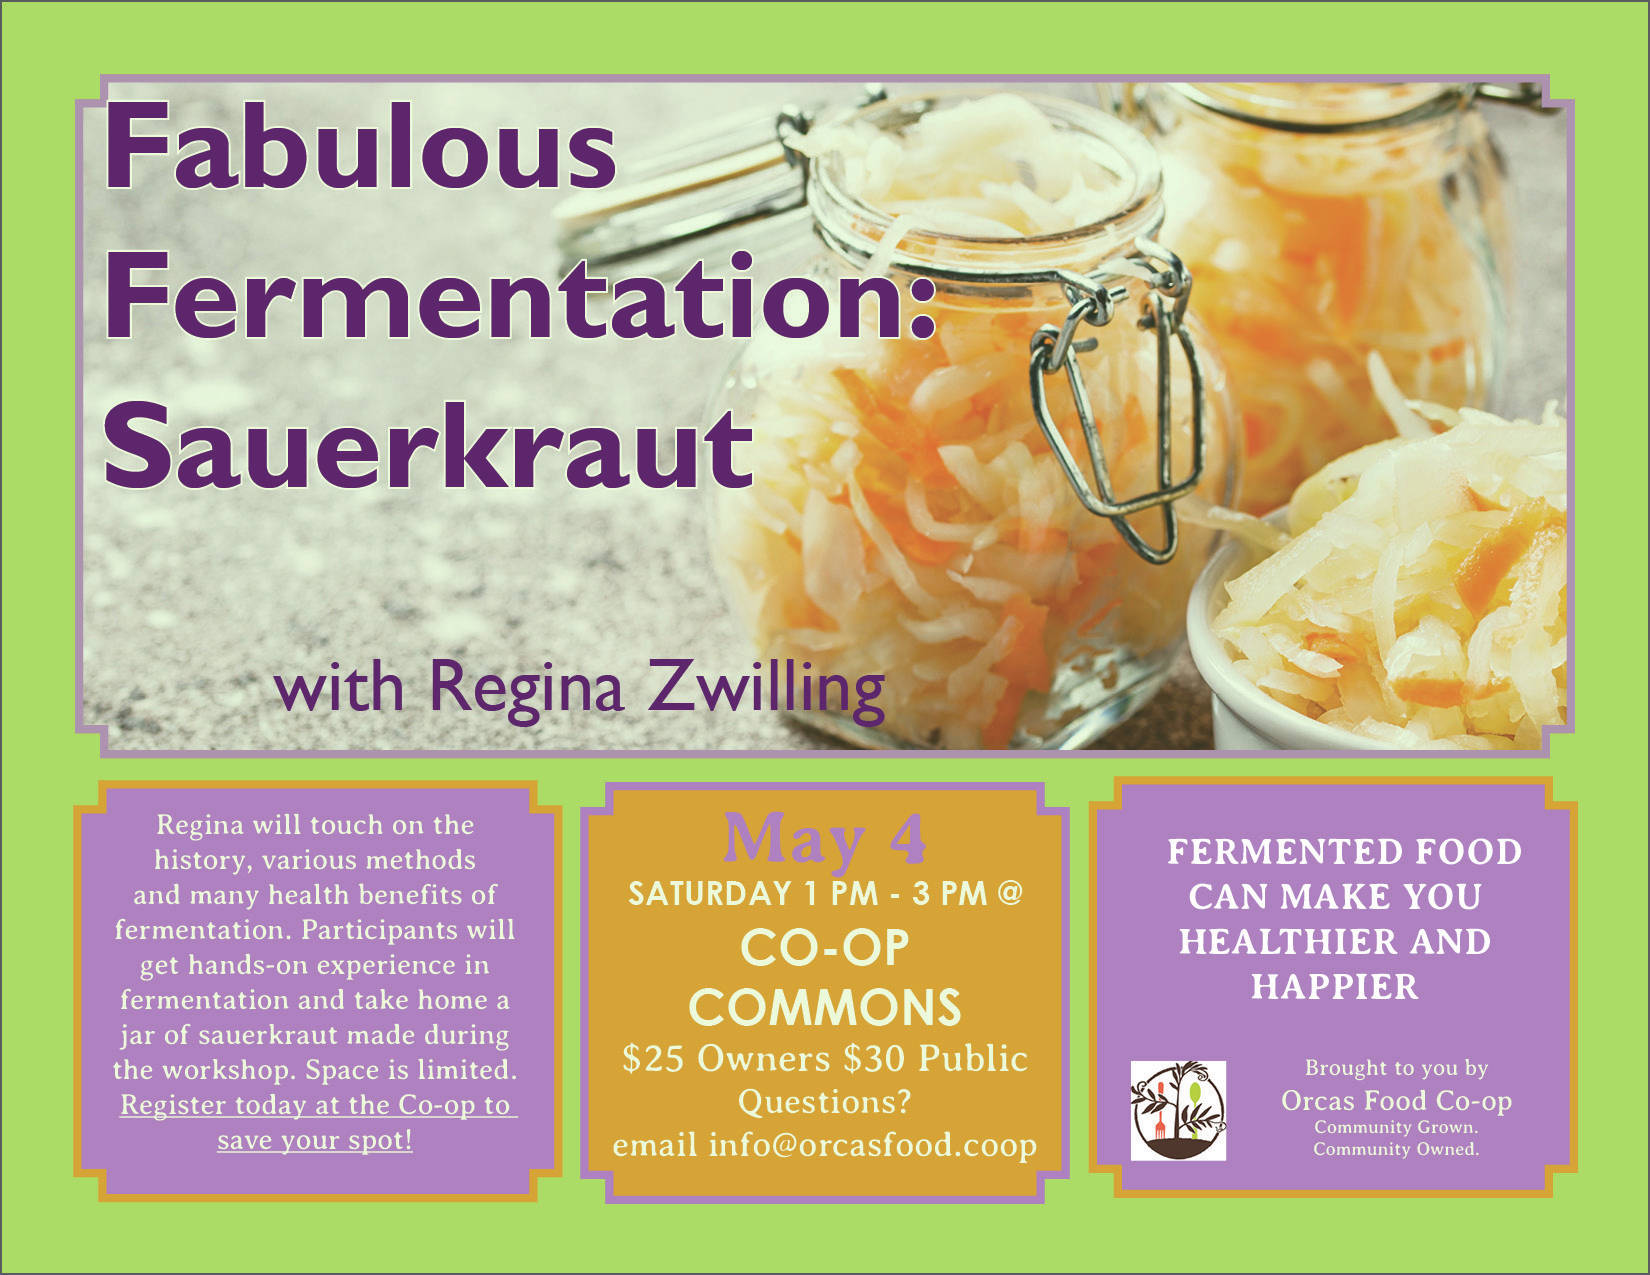 Orcas Food Co-op’s Fabulous Fermentation: Sauerkraut – workshop with Regina Zwilling